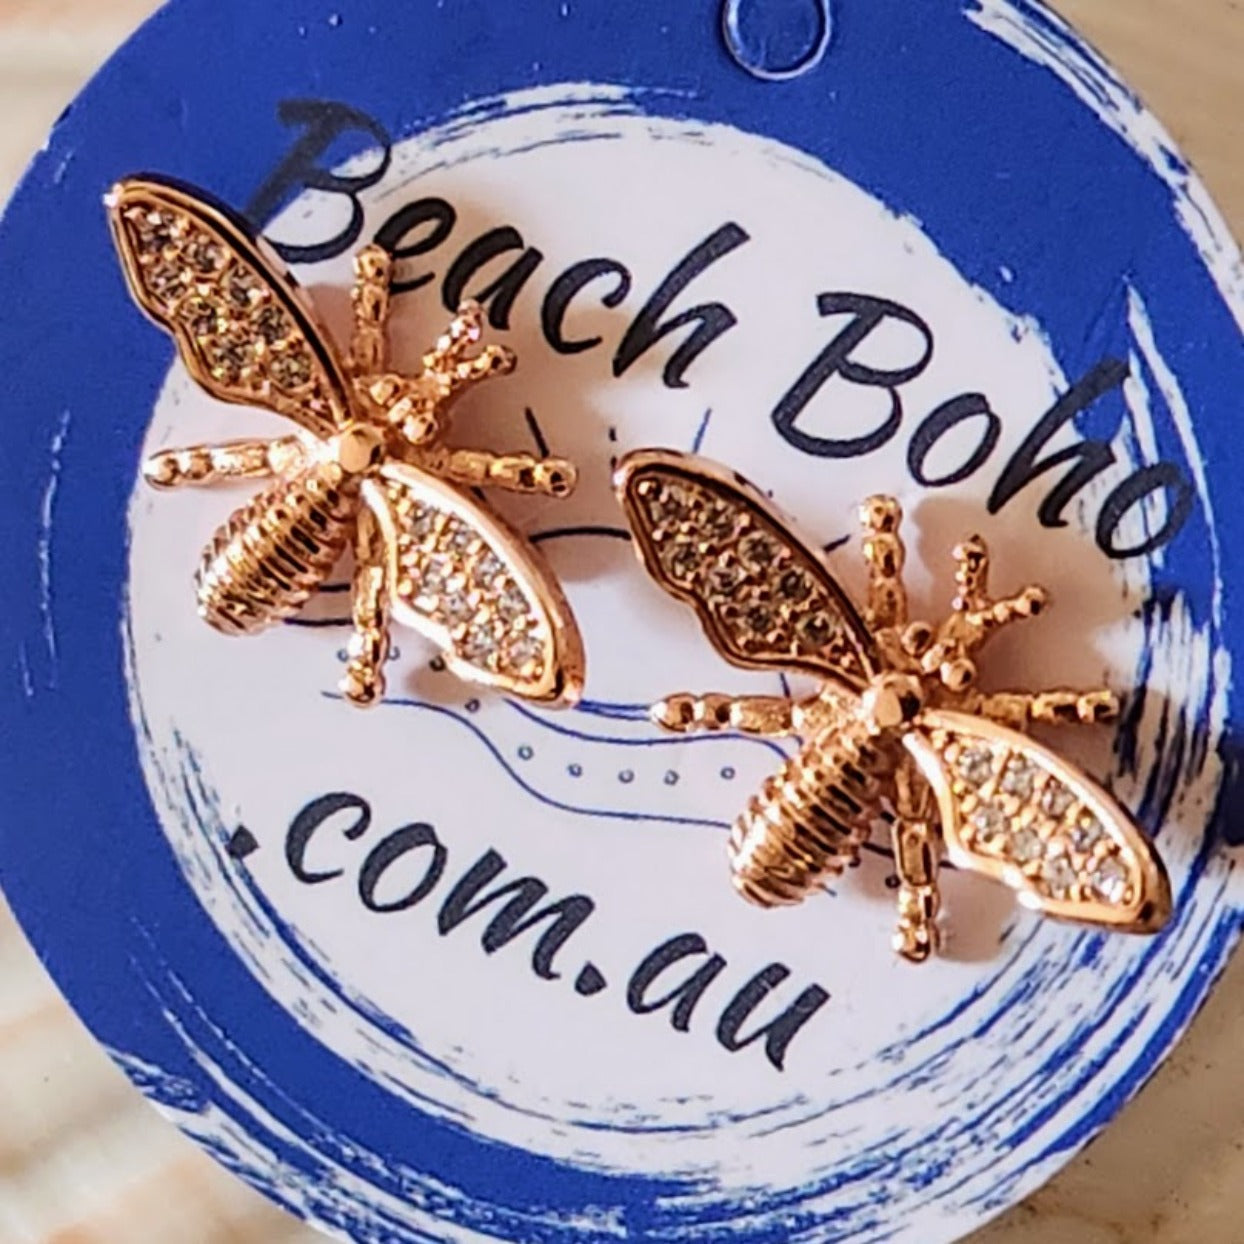 BEE ON ROSES - ROSE GOLD CUBIC ZIRCONIA EARRINGS - Premium earrings from www.beachboho.com.au - Just $35! Shop now at www.beachboho.com.au